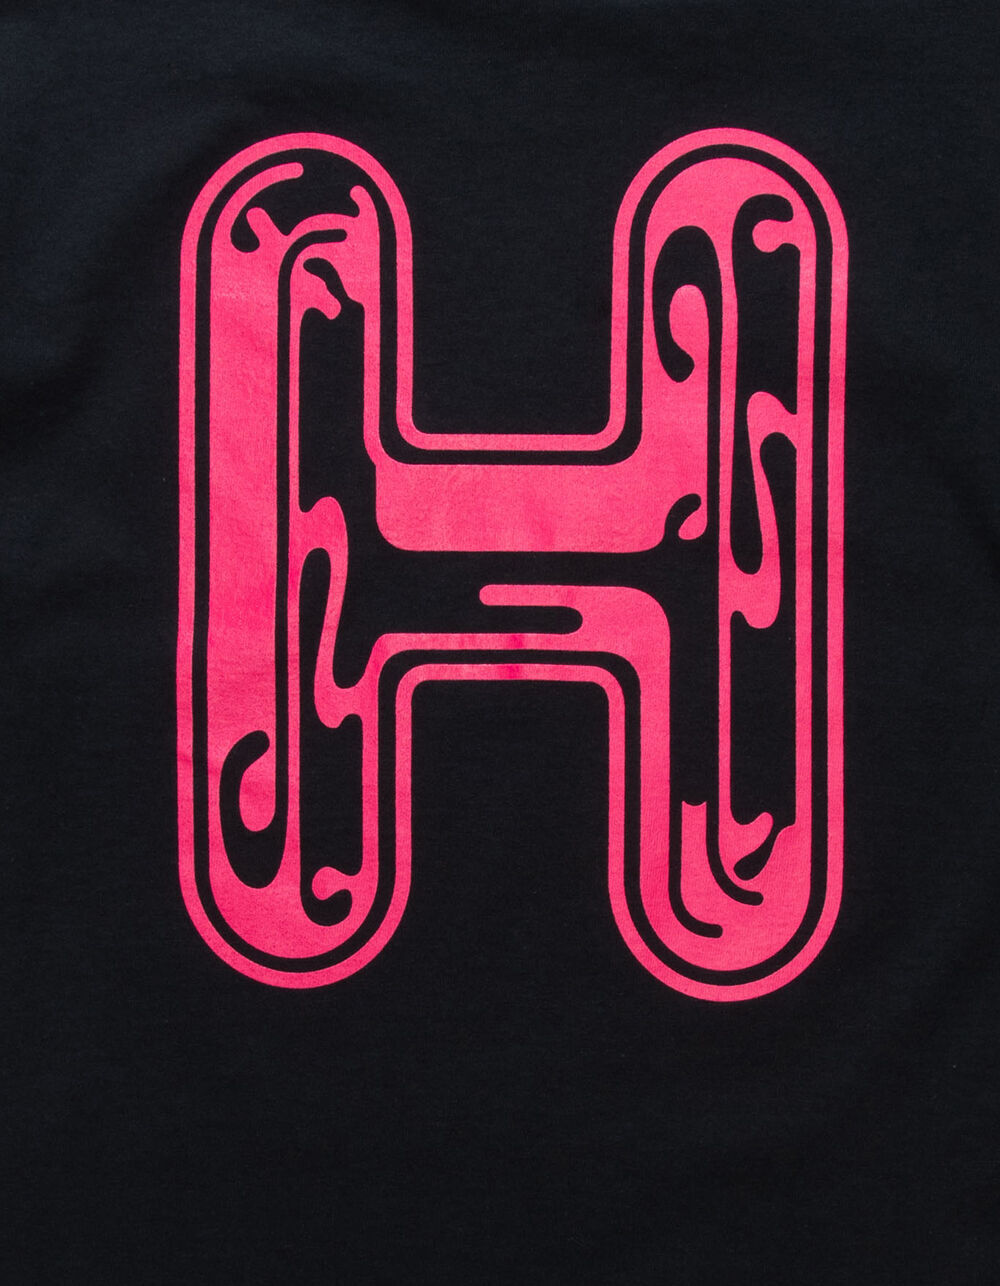 Common H T-Shirt